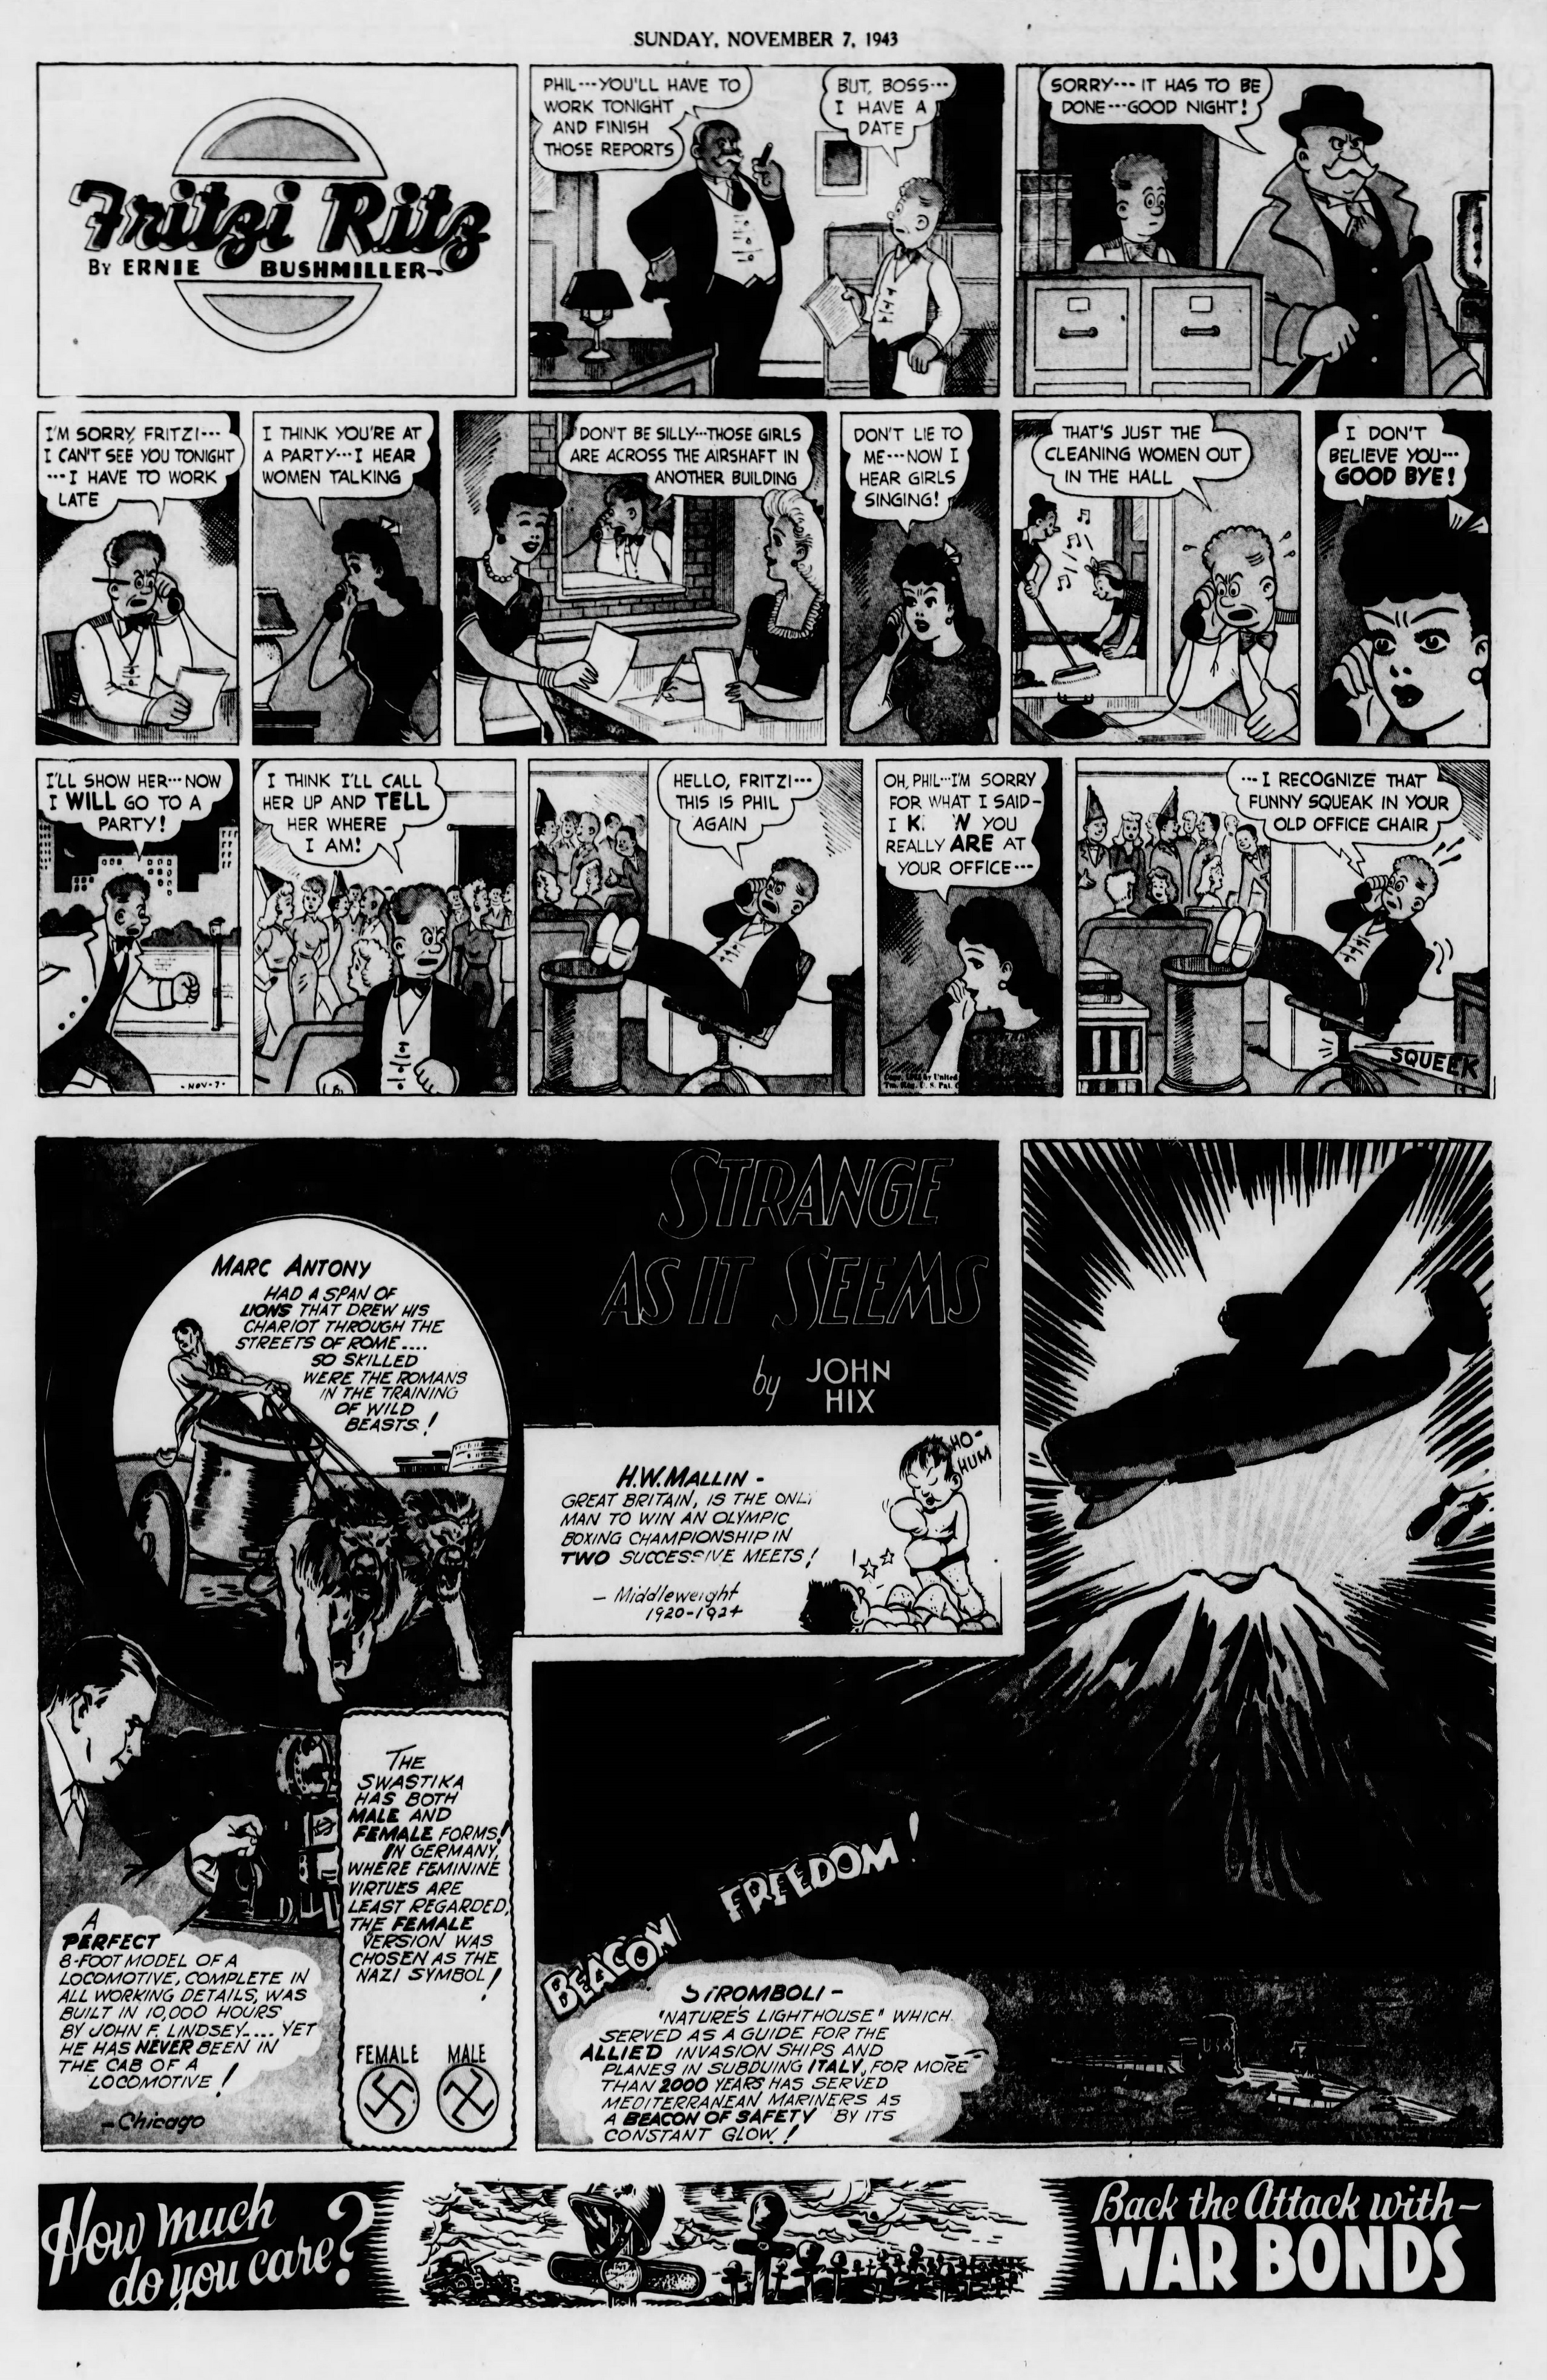 The_Brooklyn_Daily_Eagle_Sun__Nov_7__1943_(9).jpg